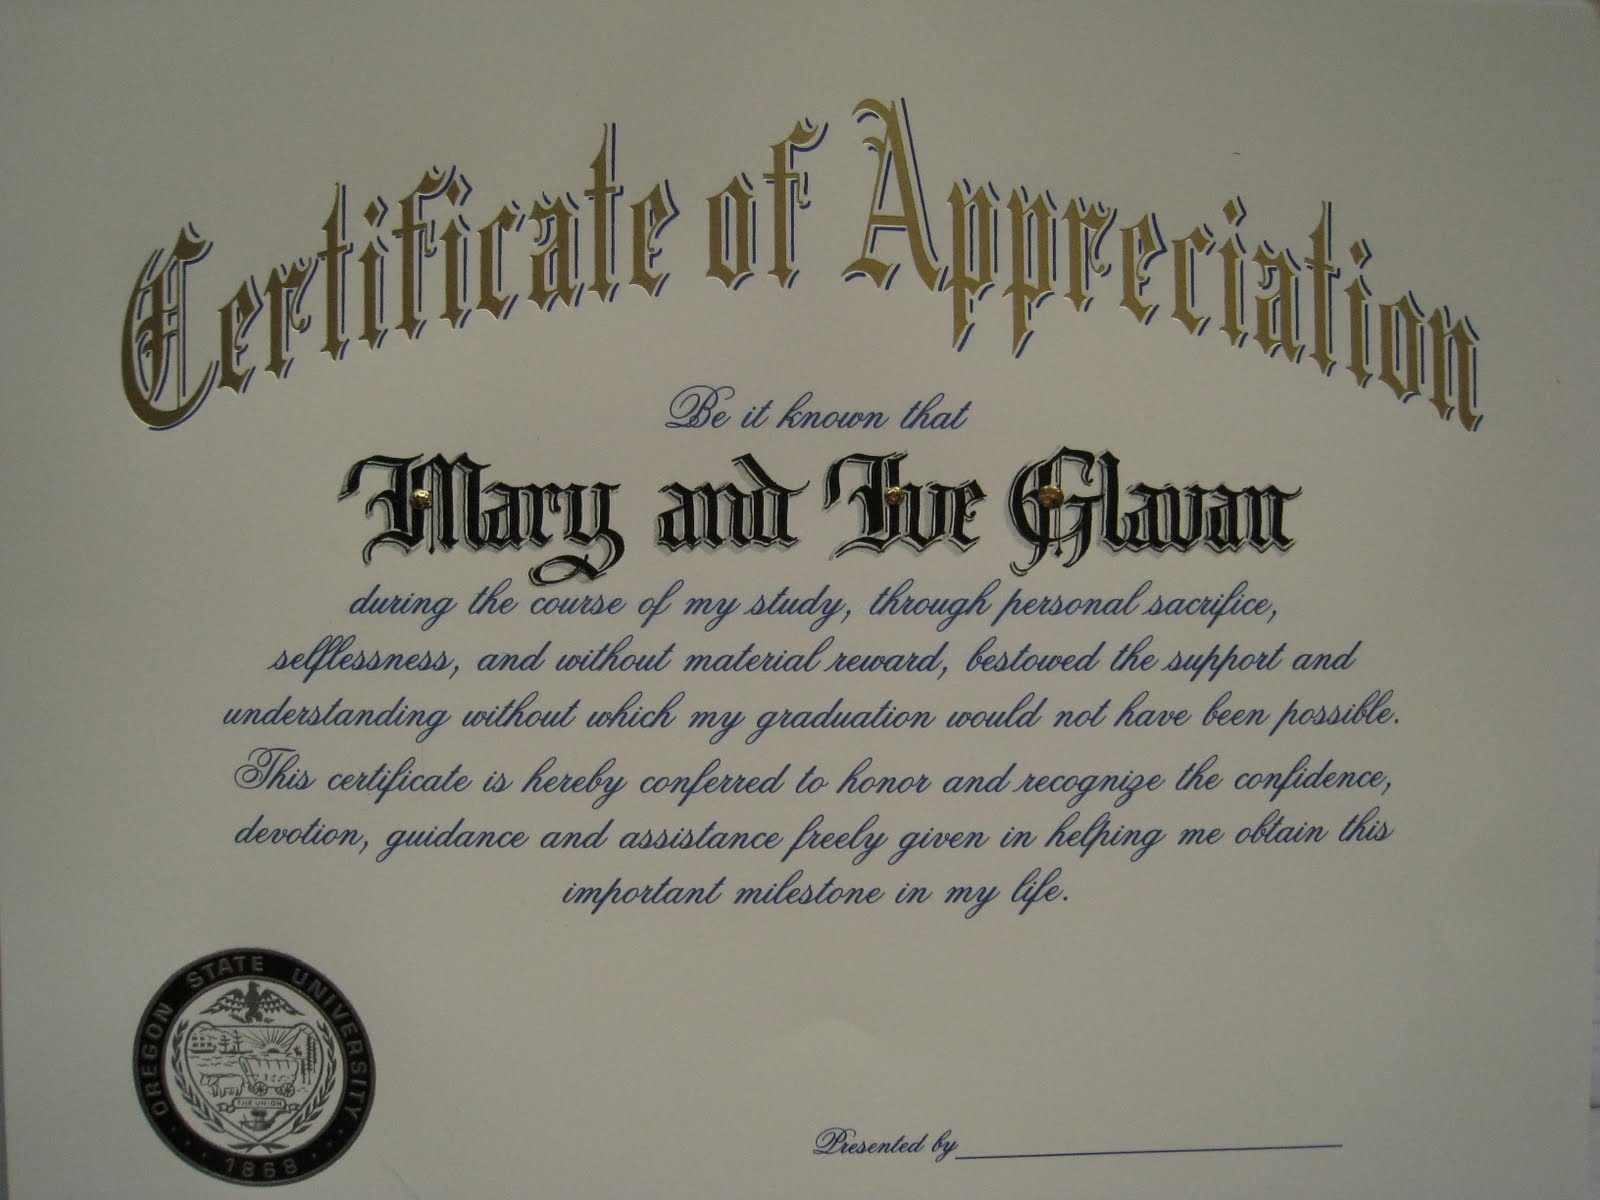 Certificate Of Appreciation Sample Format